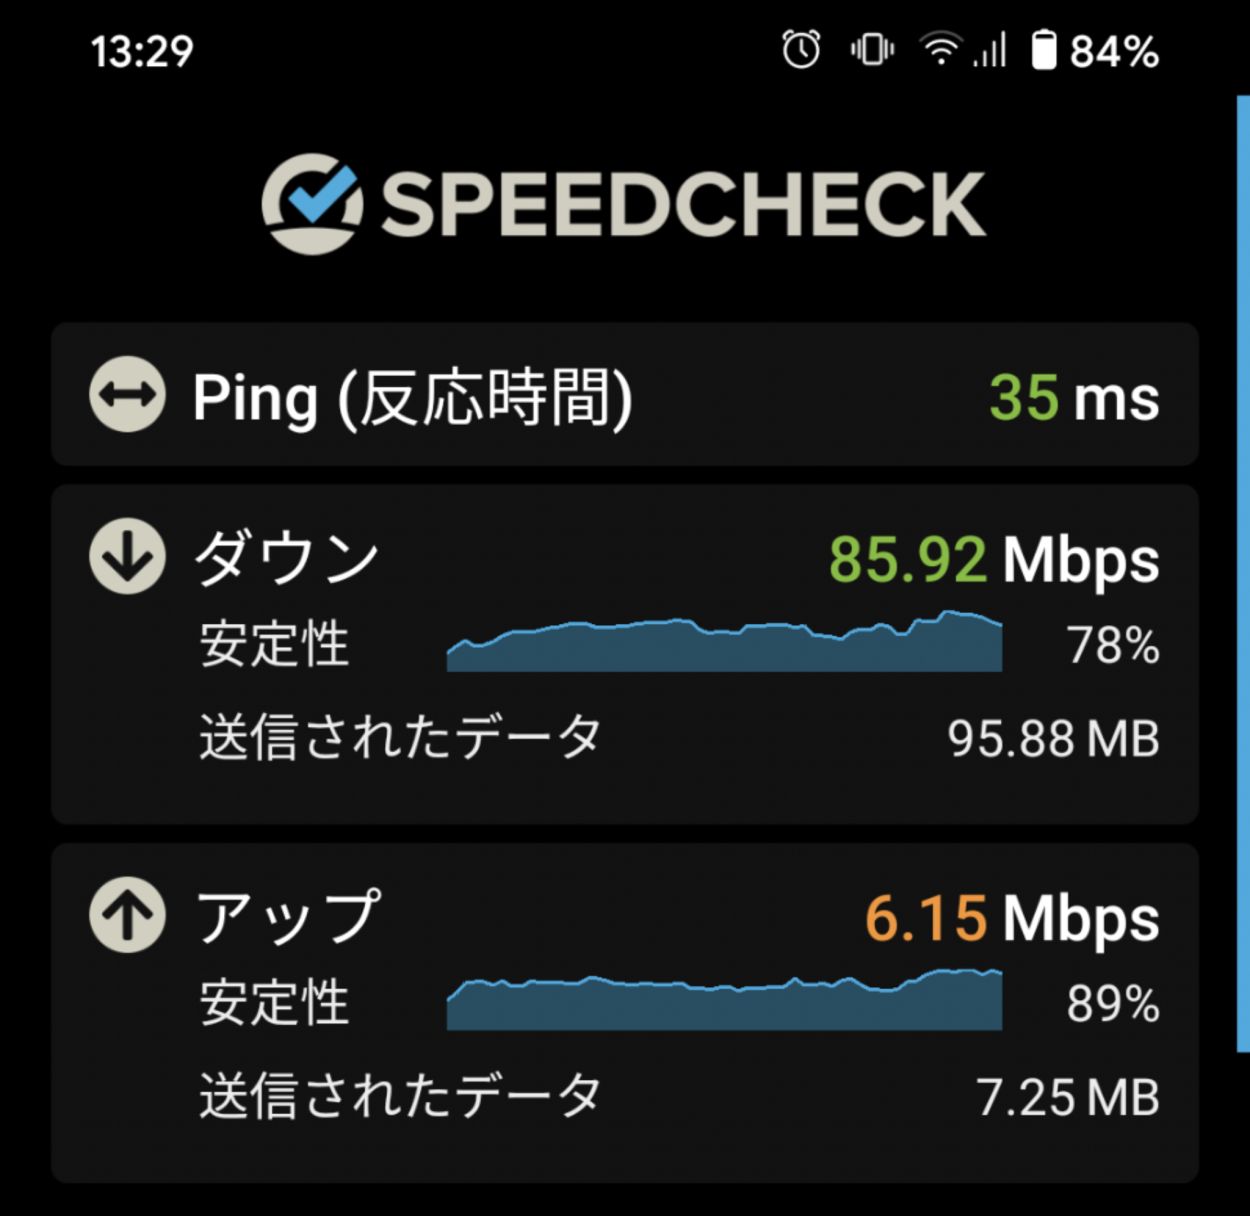 FUJI wifi SIMプランの速度